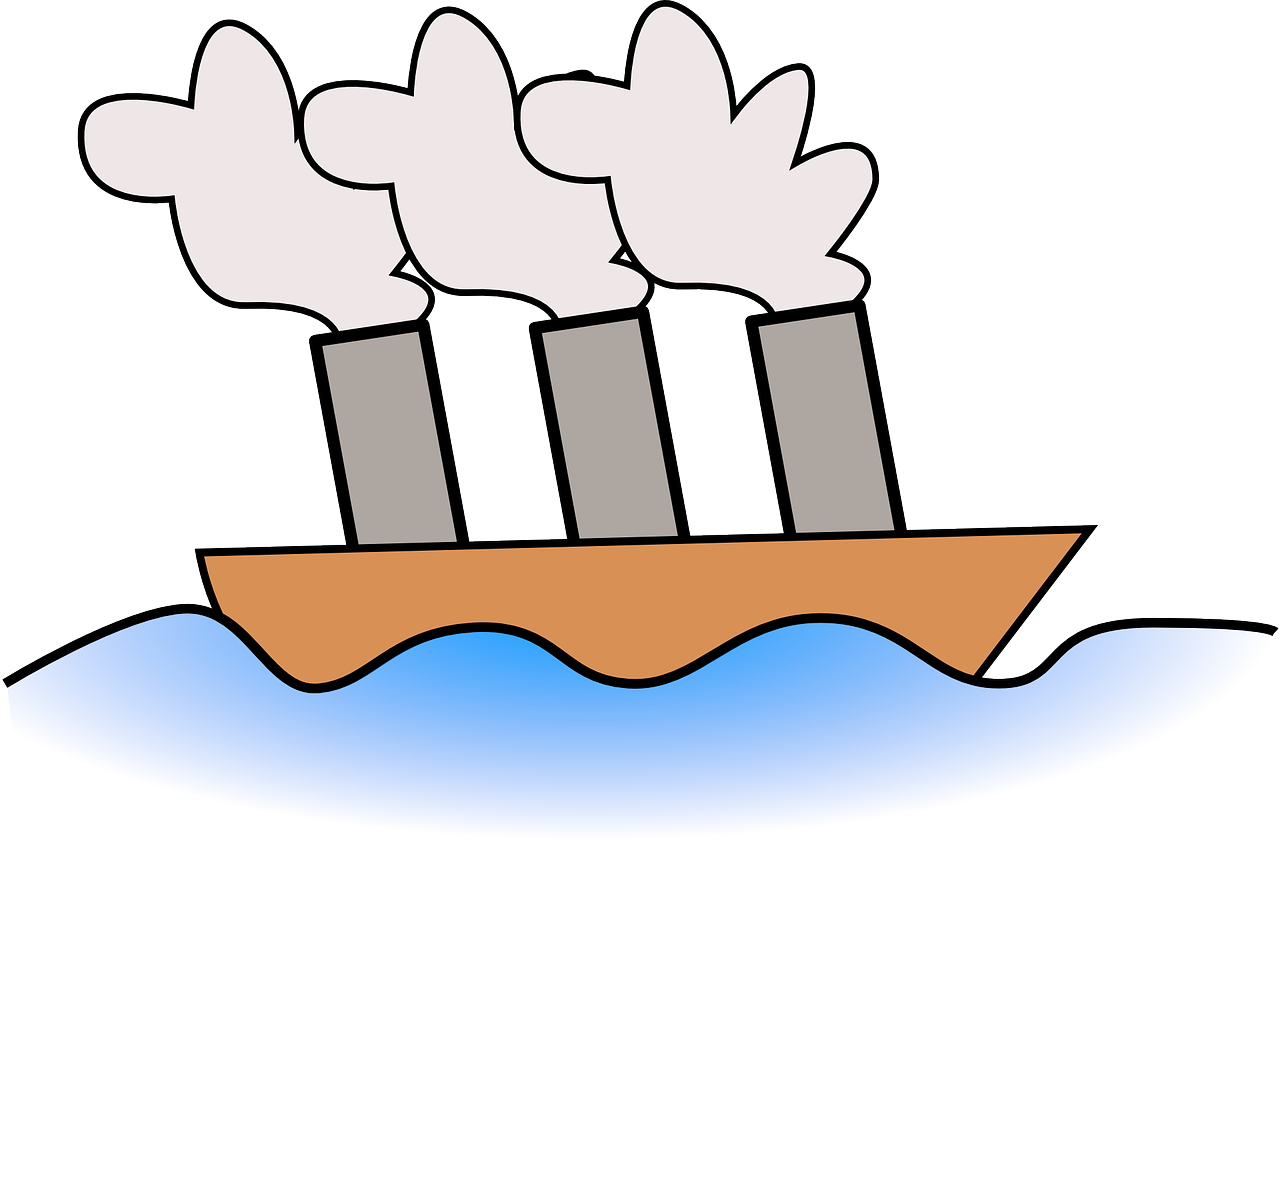 Boat, Ship, Steamship, Cartoon, Boat, Steam #boat, #ship.